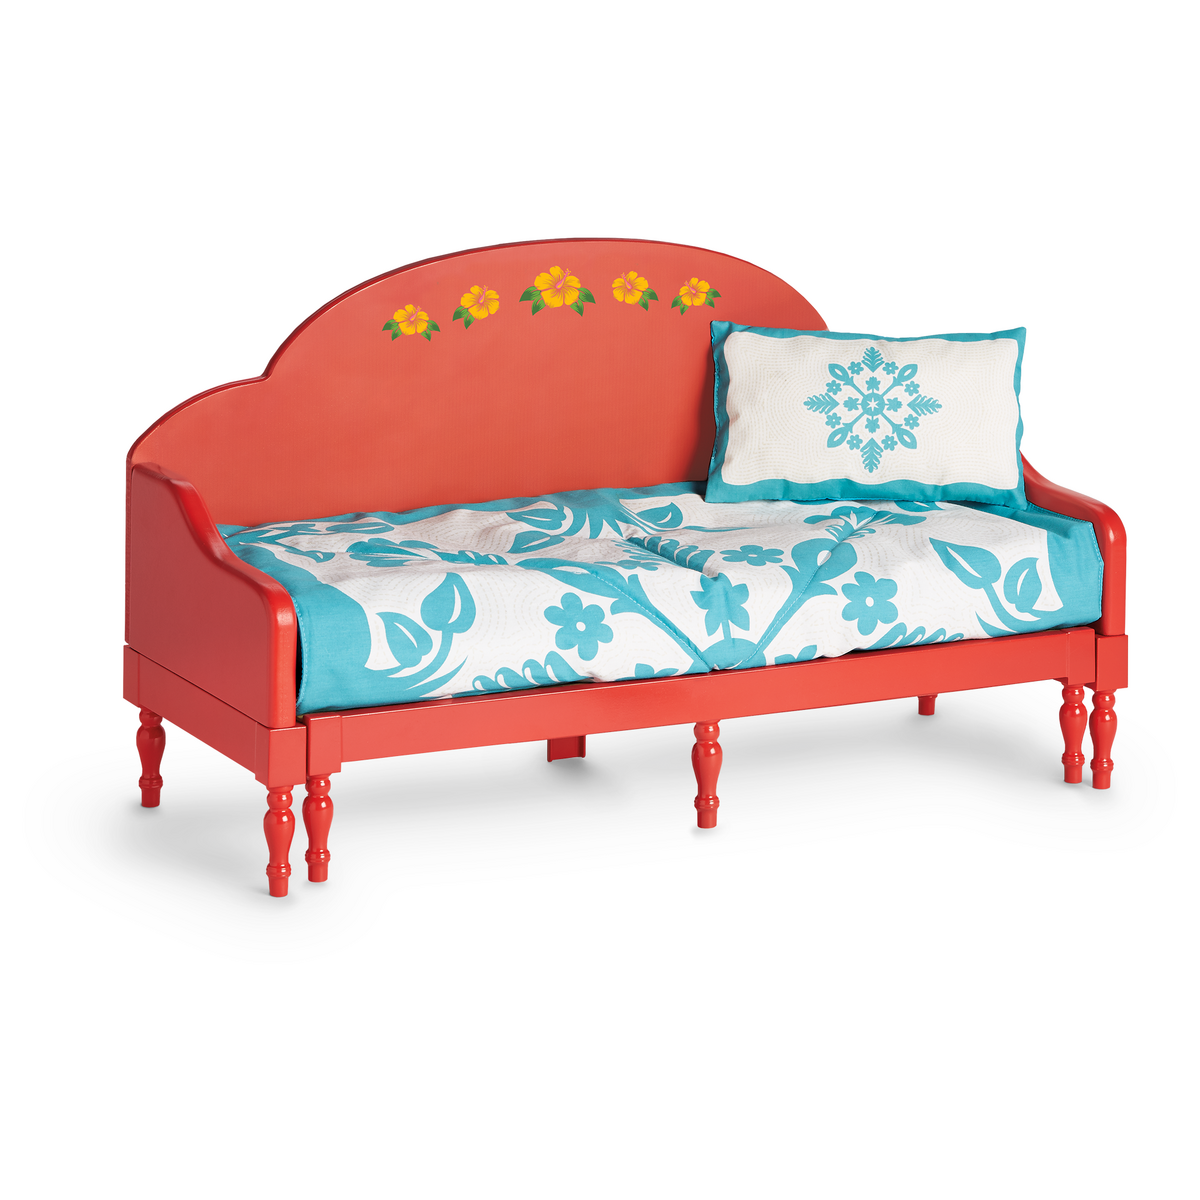 Nanea's Bed and Hawaiian Quilt, American Girl Wiki